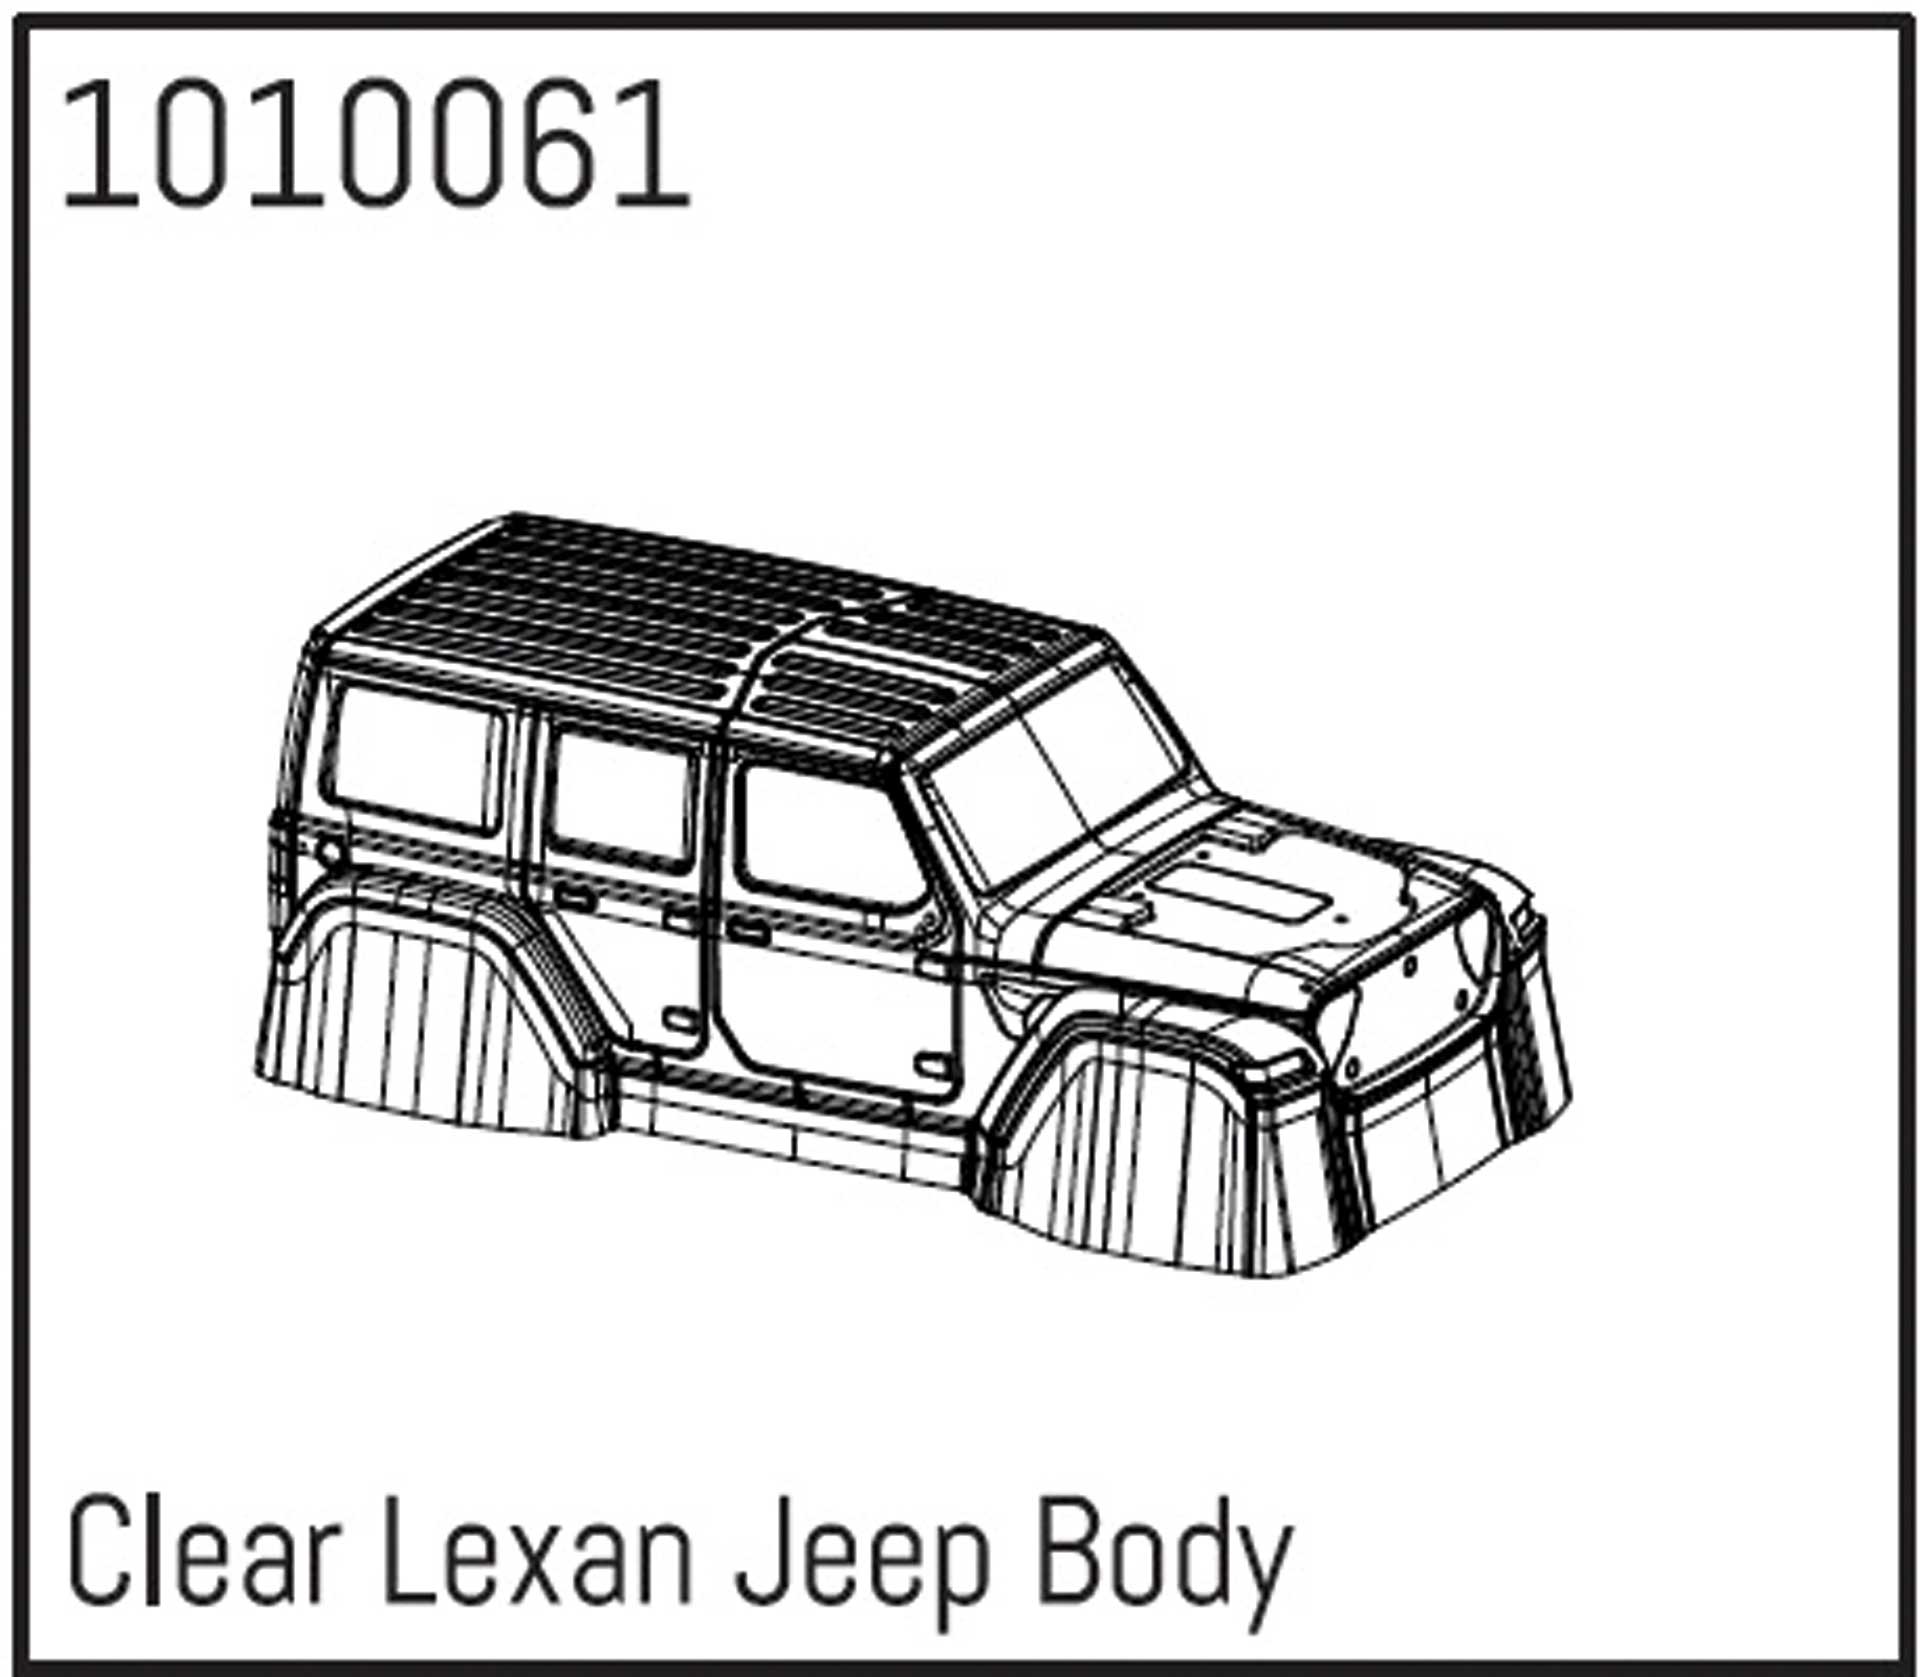 ABSIMA Clear Lexan Wrangler body kit